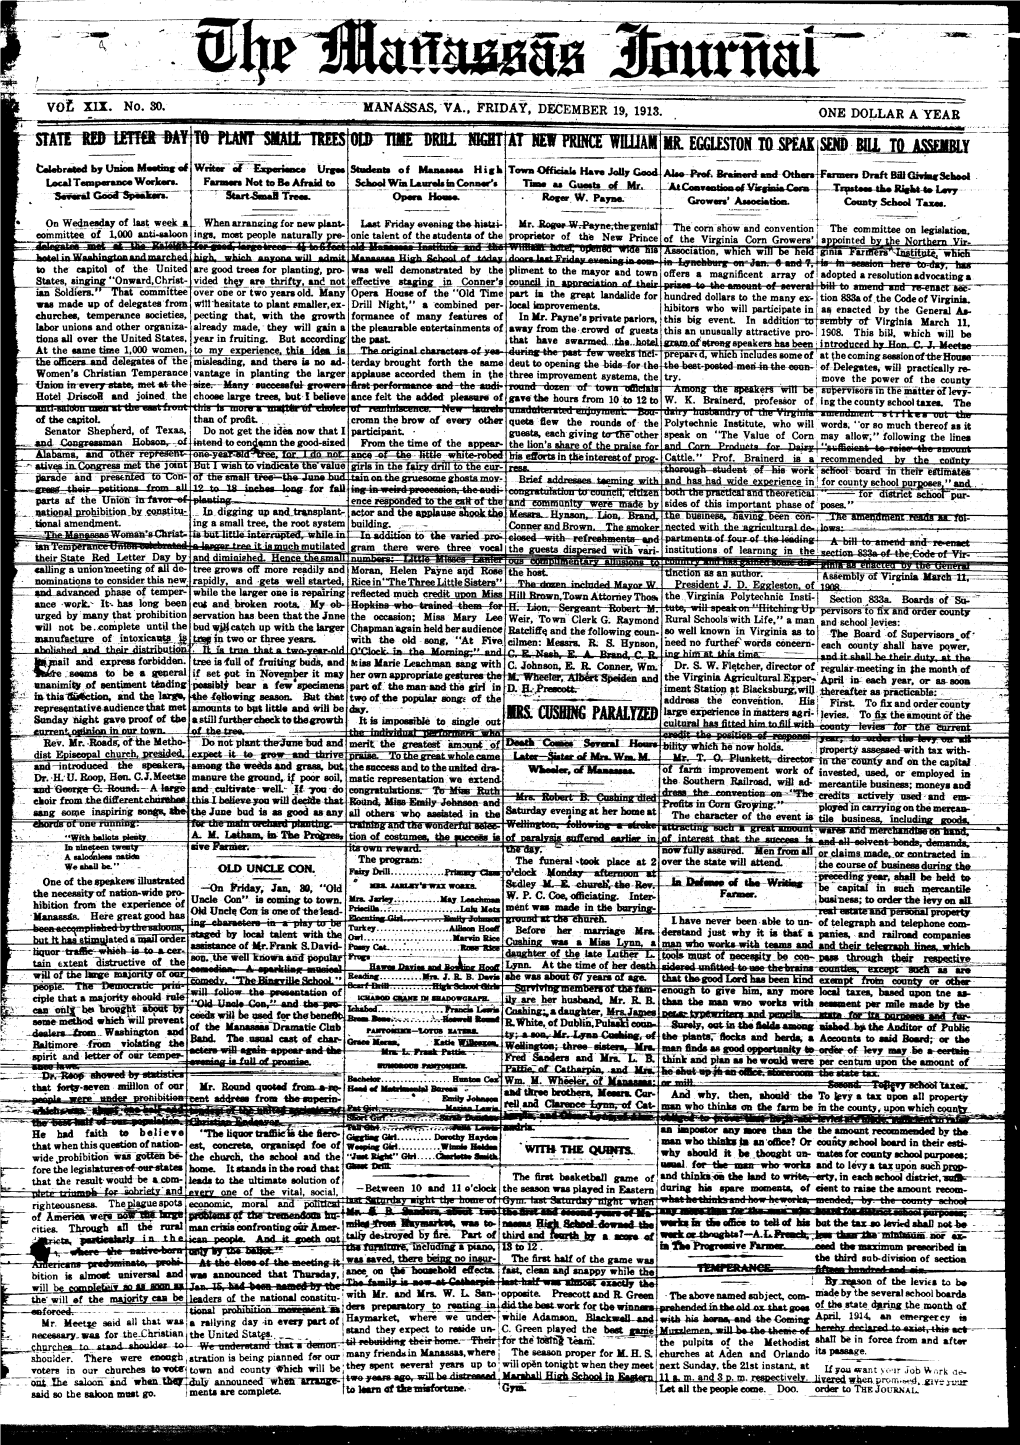 The Manassas Journal 1913 12 19